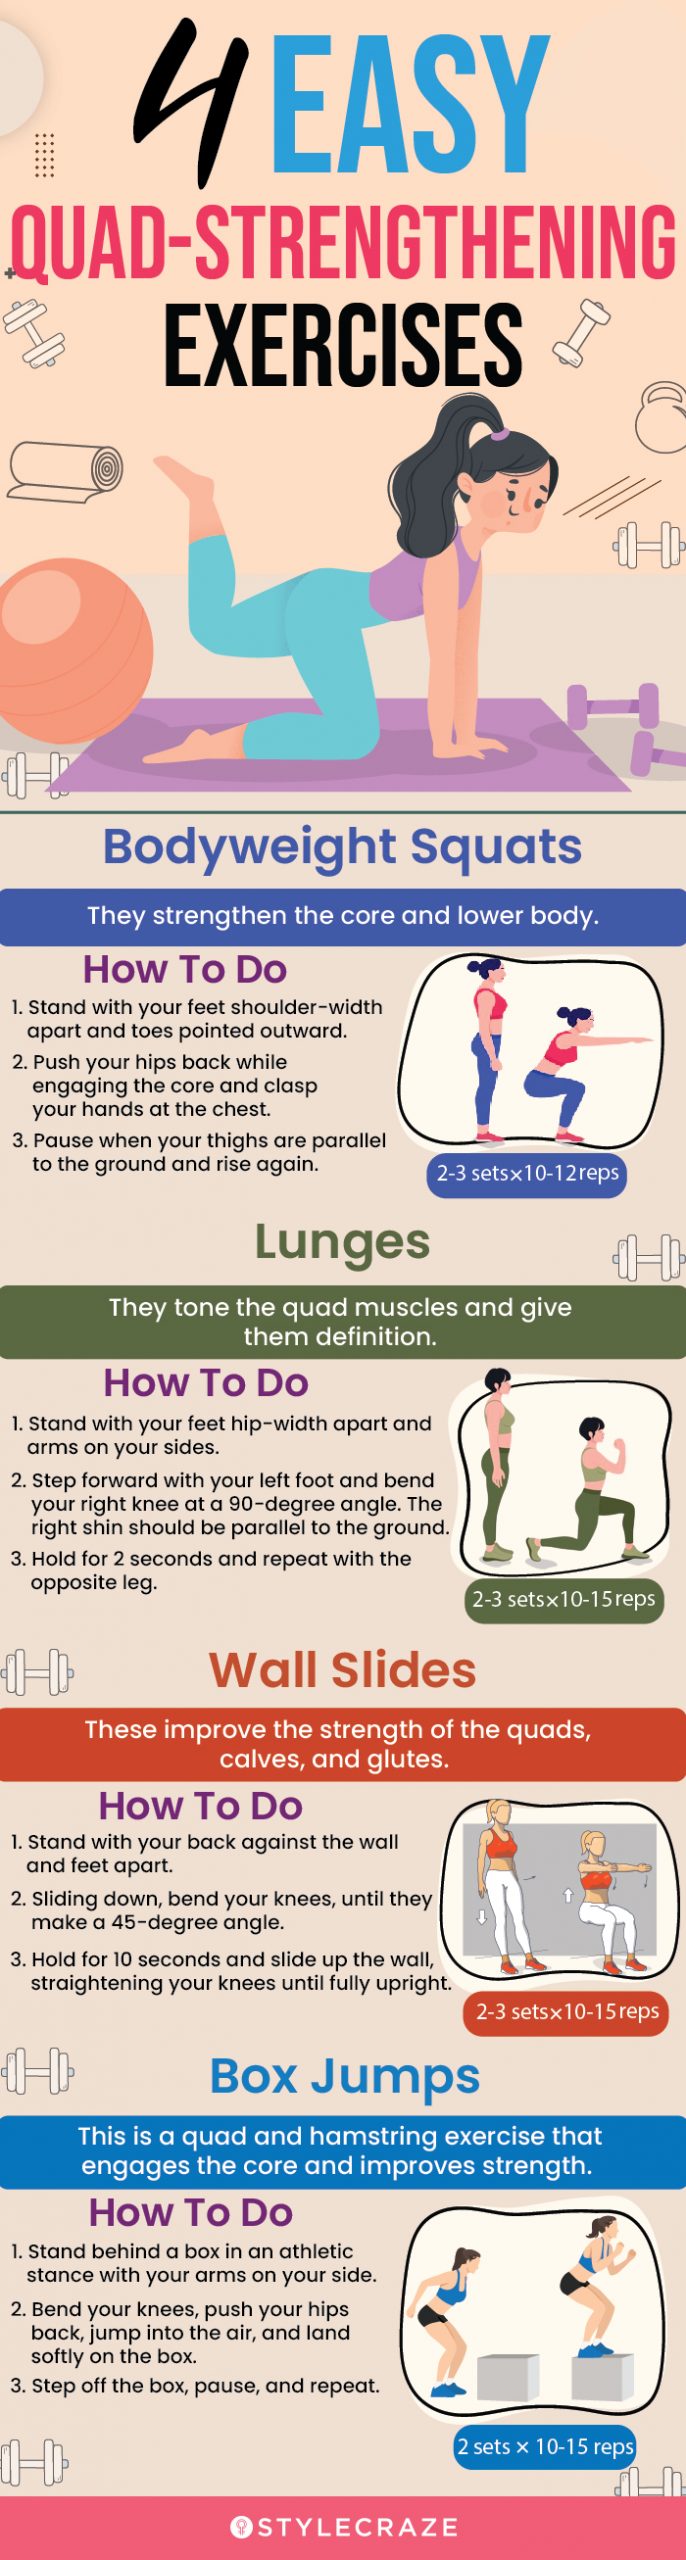 4 easy quad strengthening exercises (infographic)